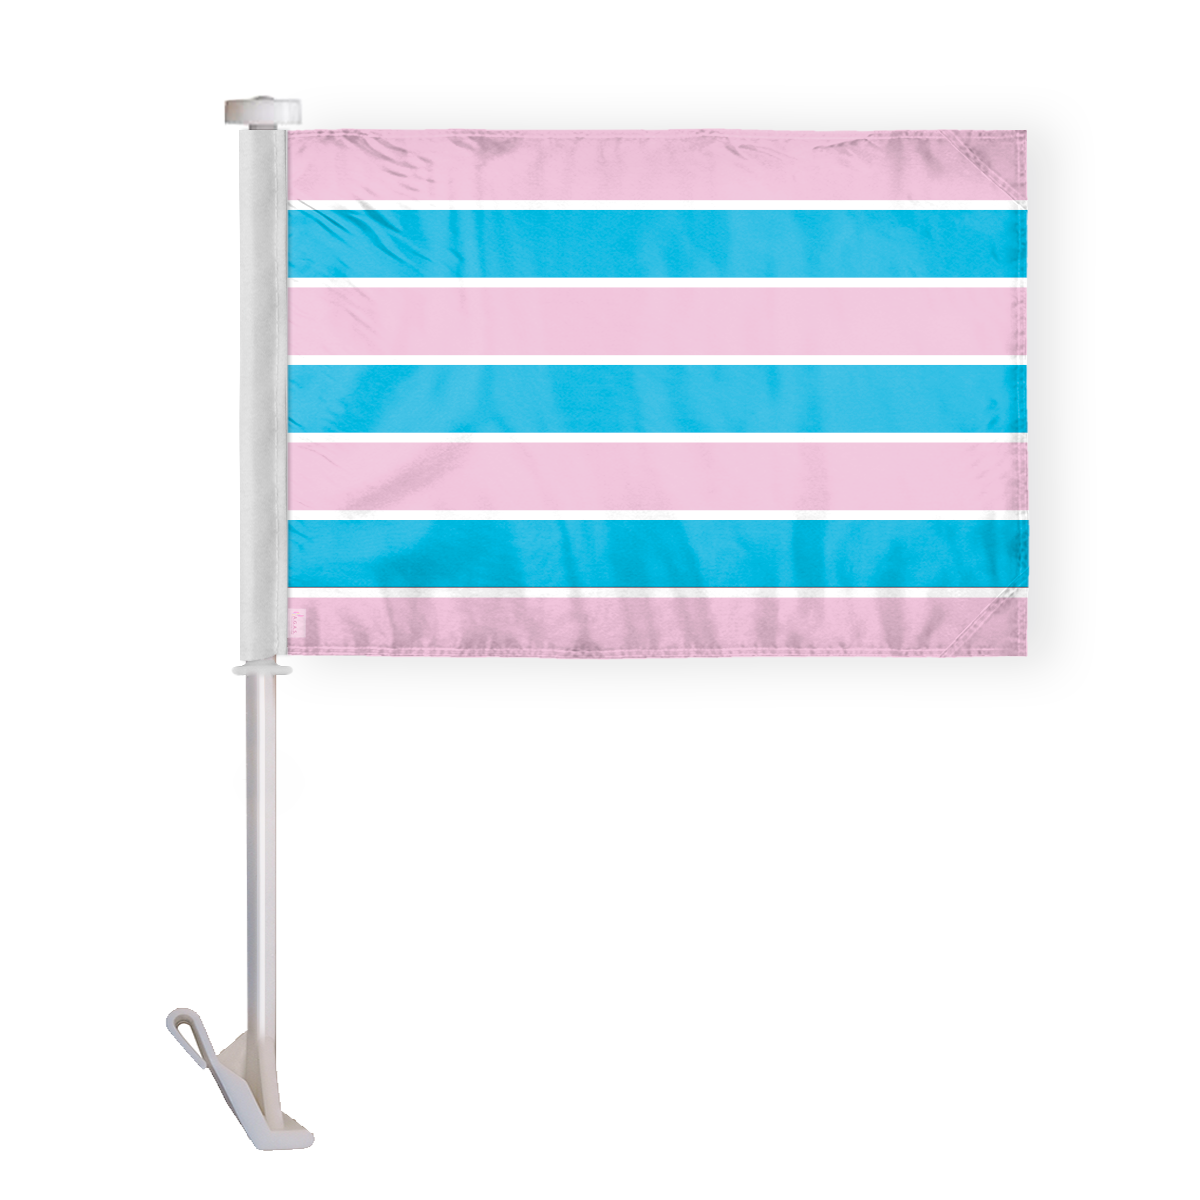 AGAS Transsexual Pride Car Window Flag 10.5x15 inch